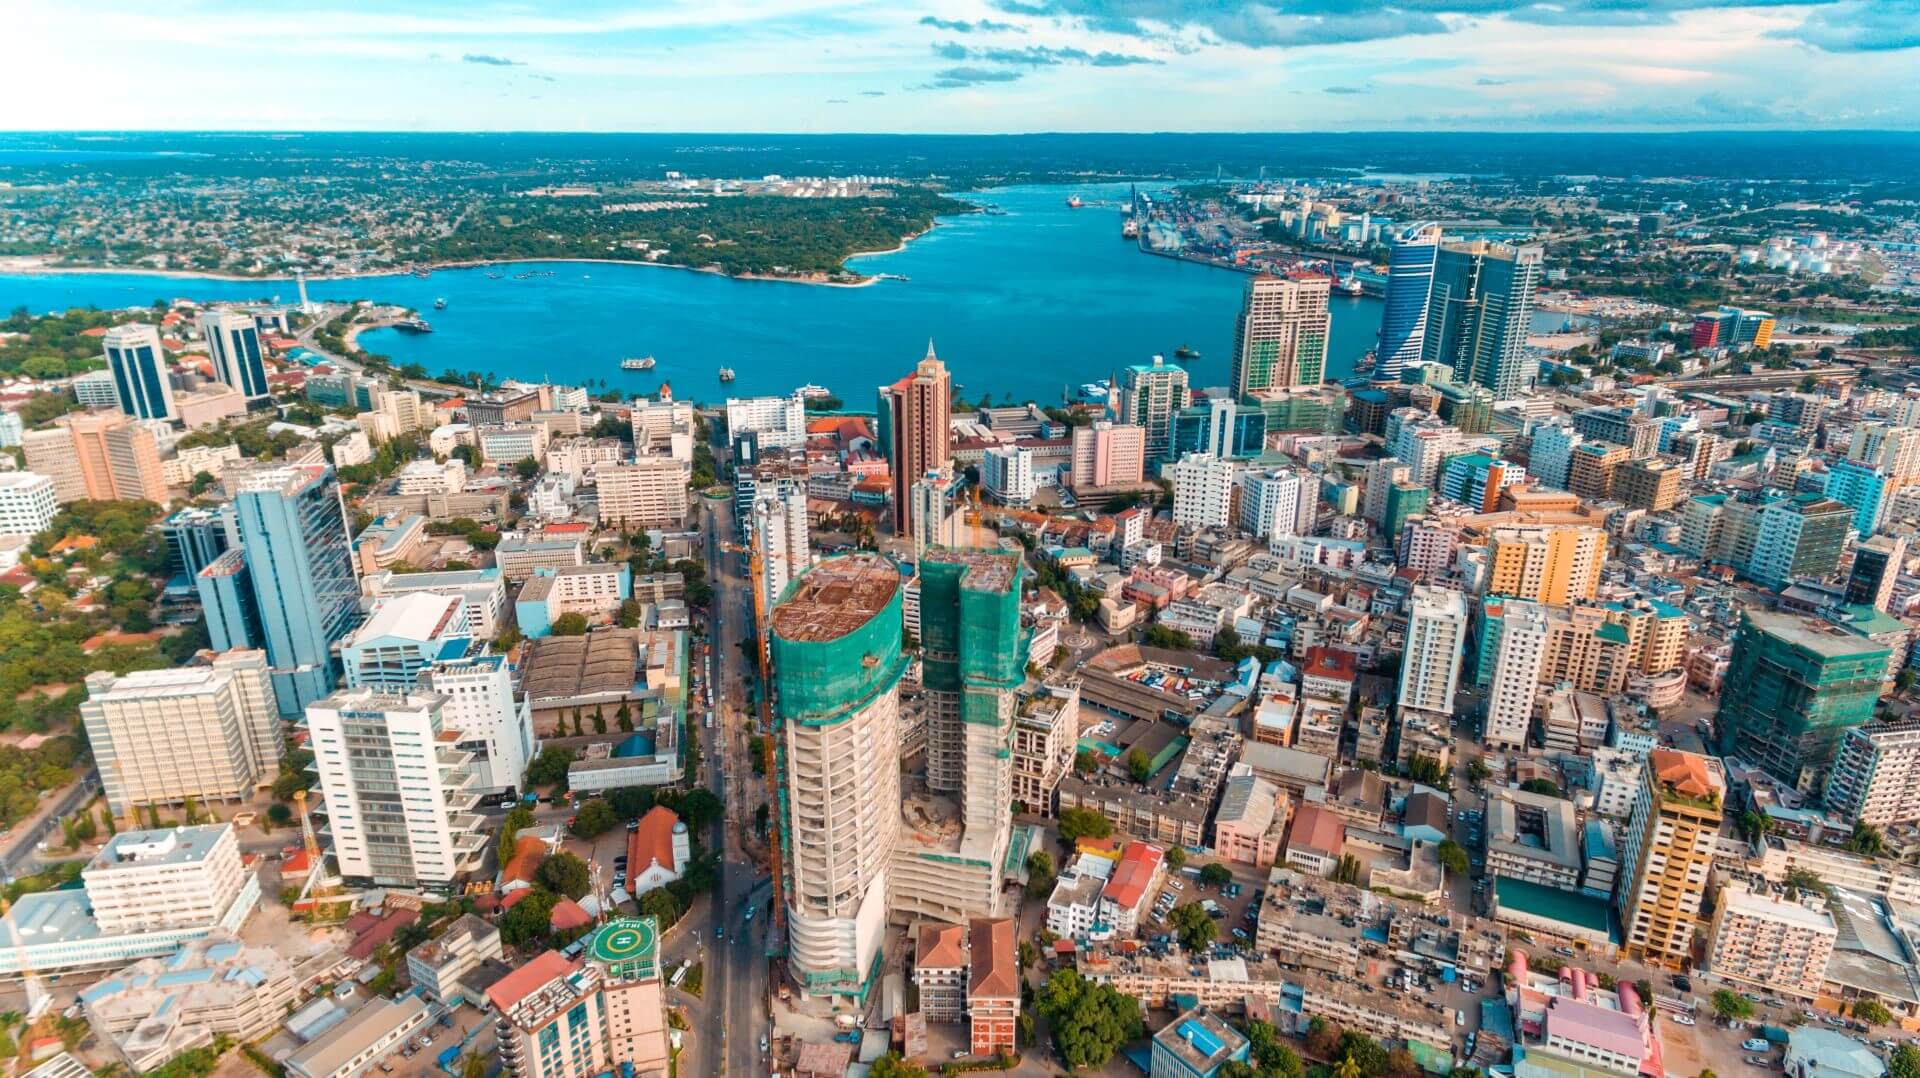 Aerial view of city of Dar es Salaam, Tanzania